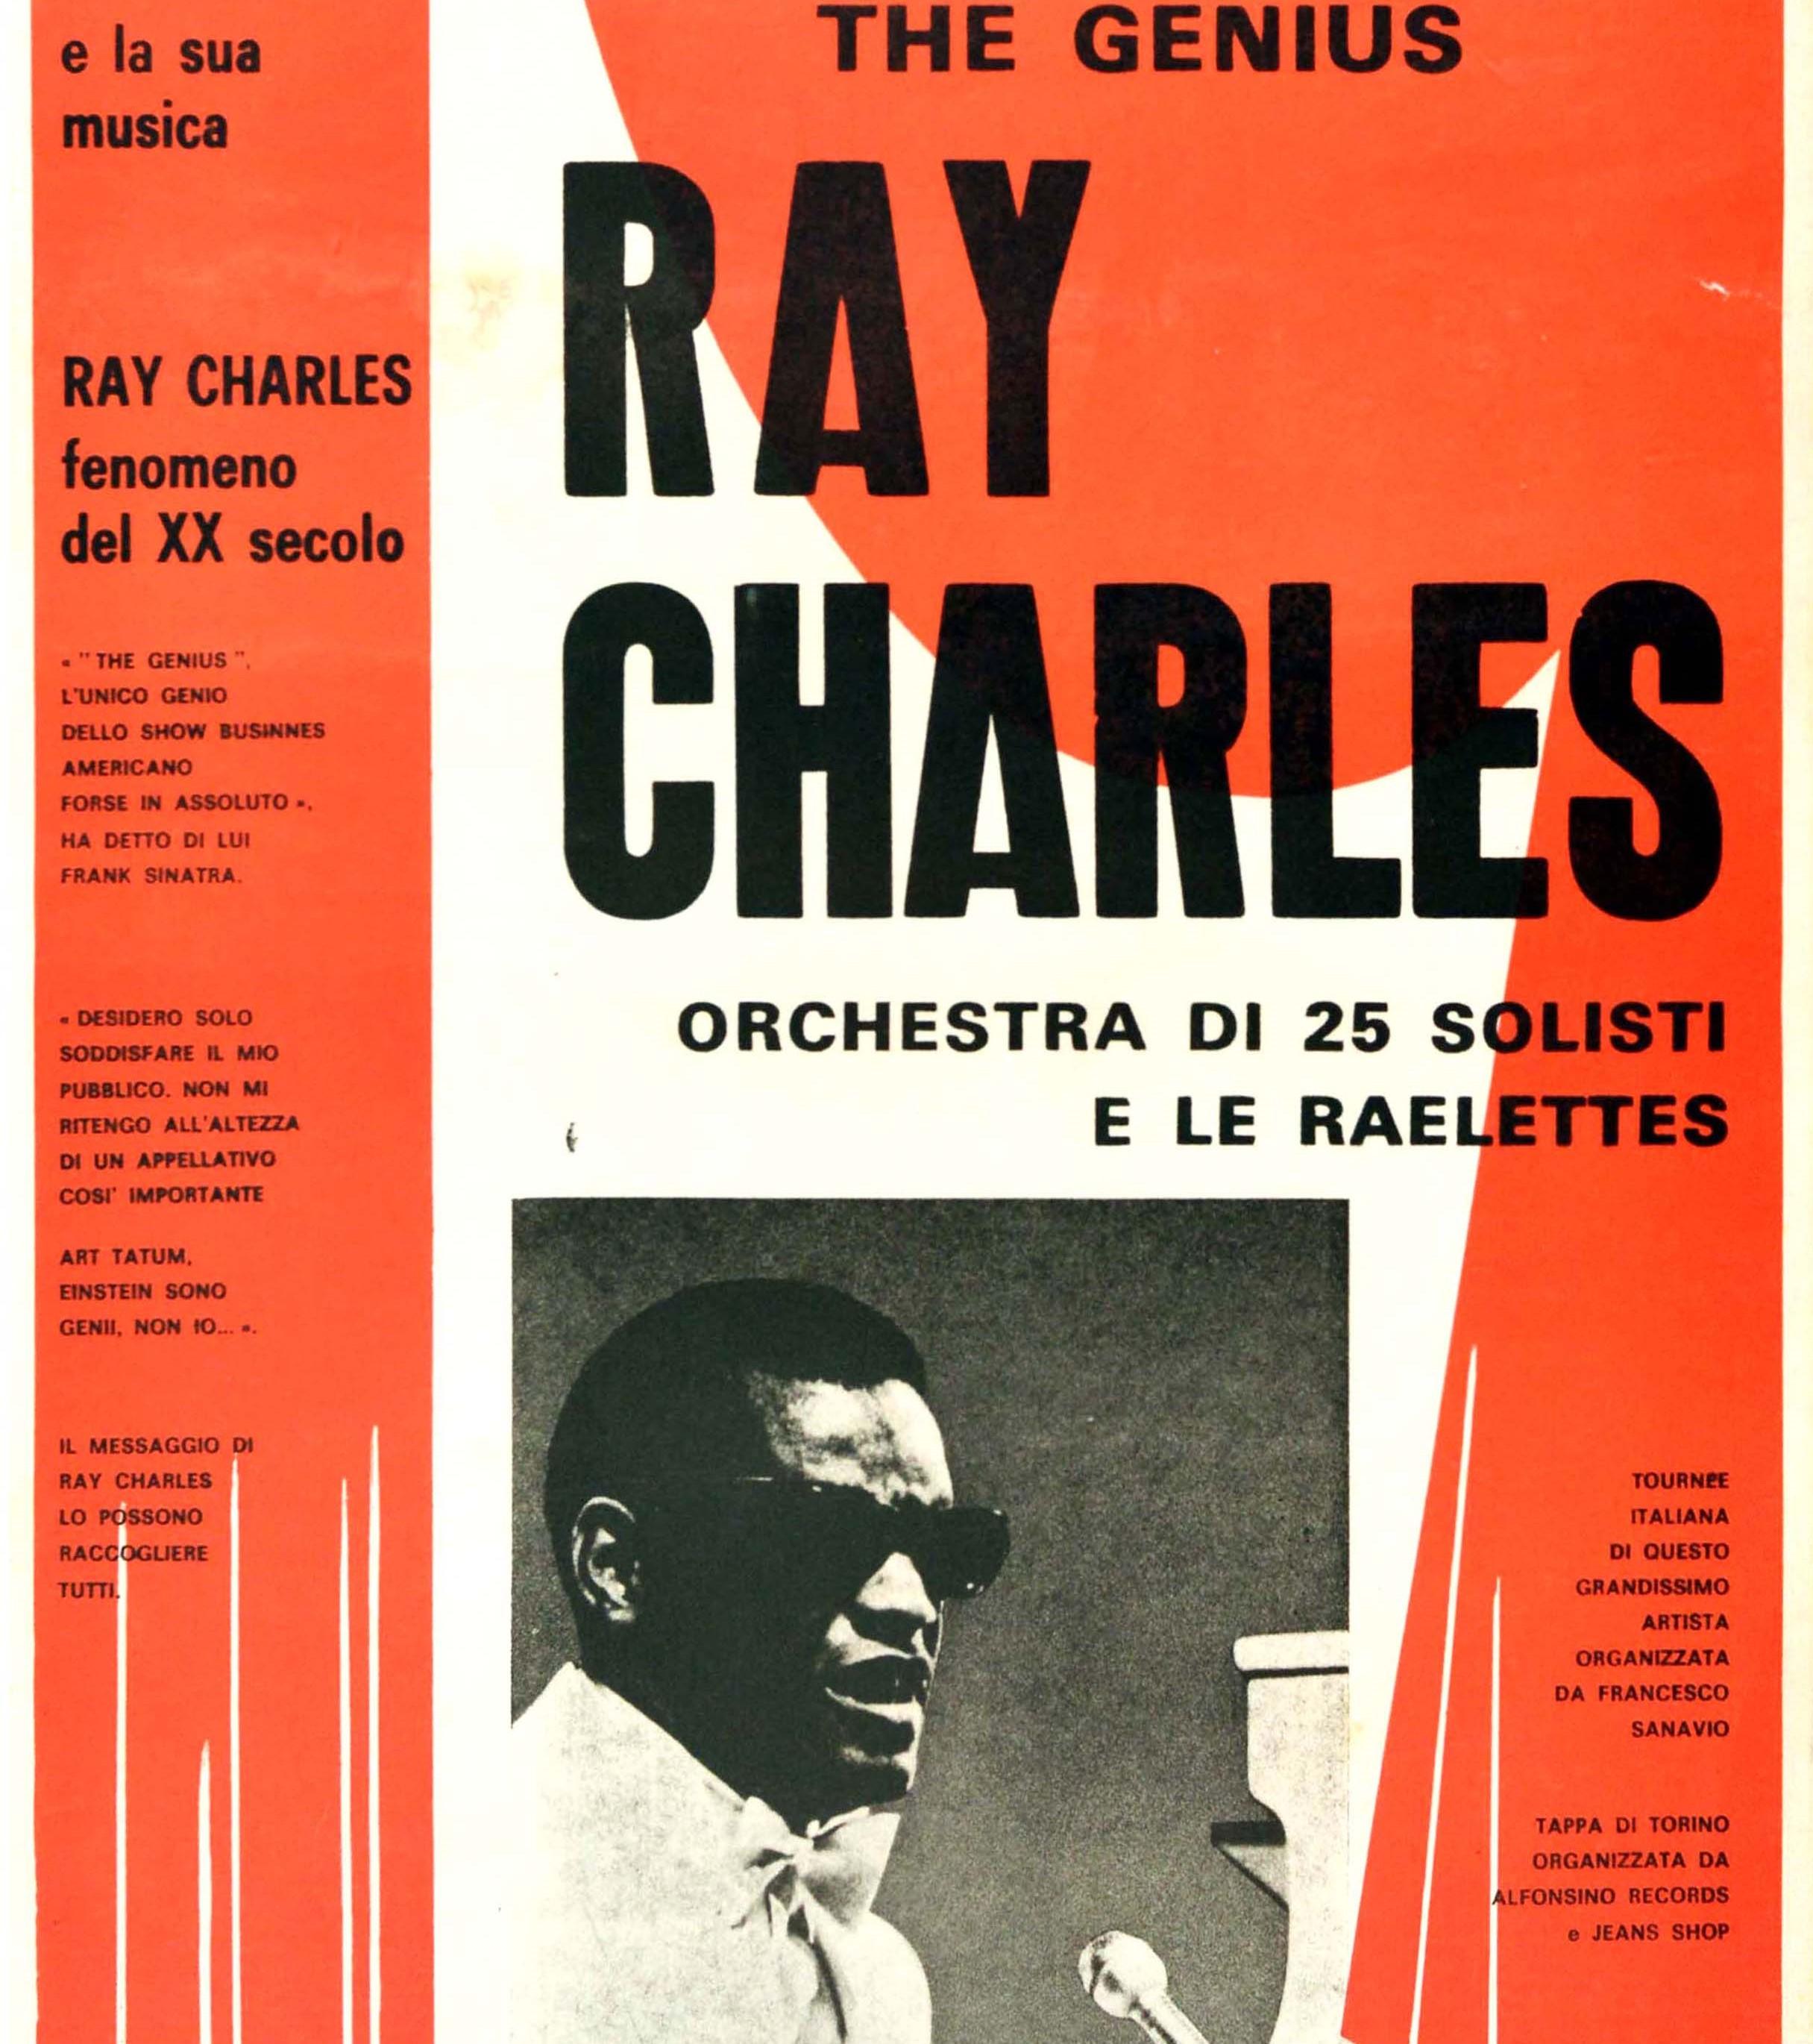 ray charles poster